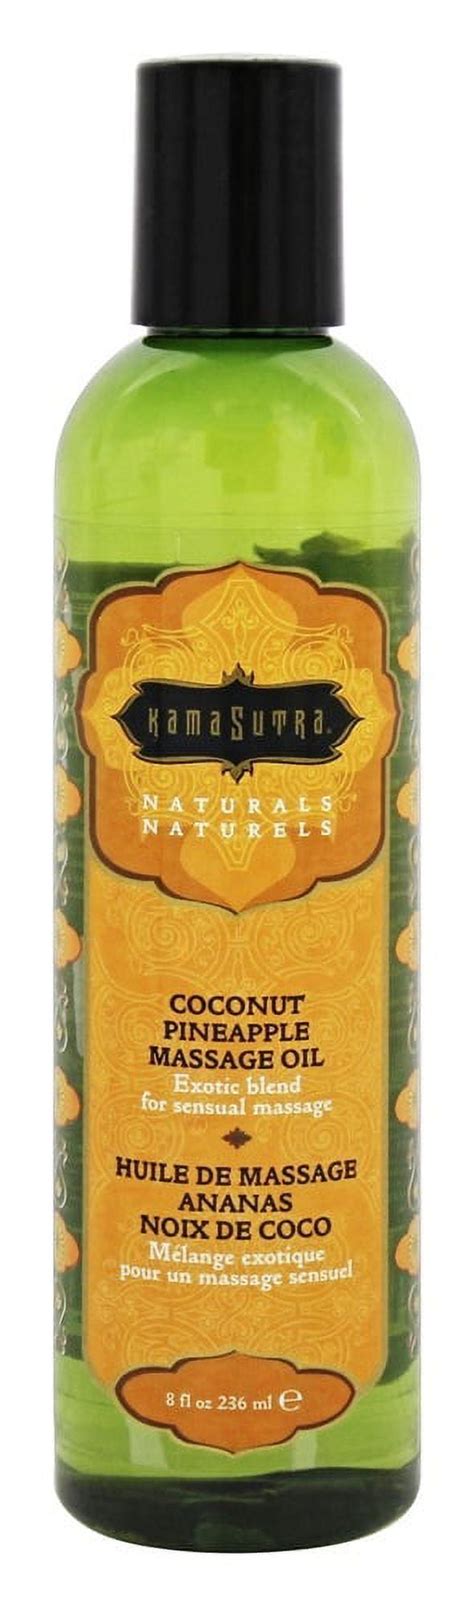 The Kama Sutra Company Naturals Massage Oil Coconut Pineapple 8 Oz